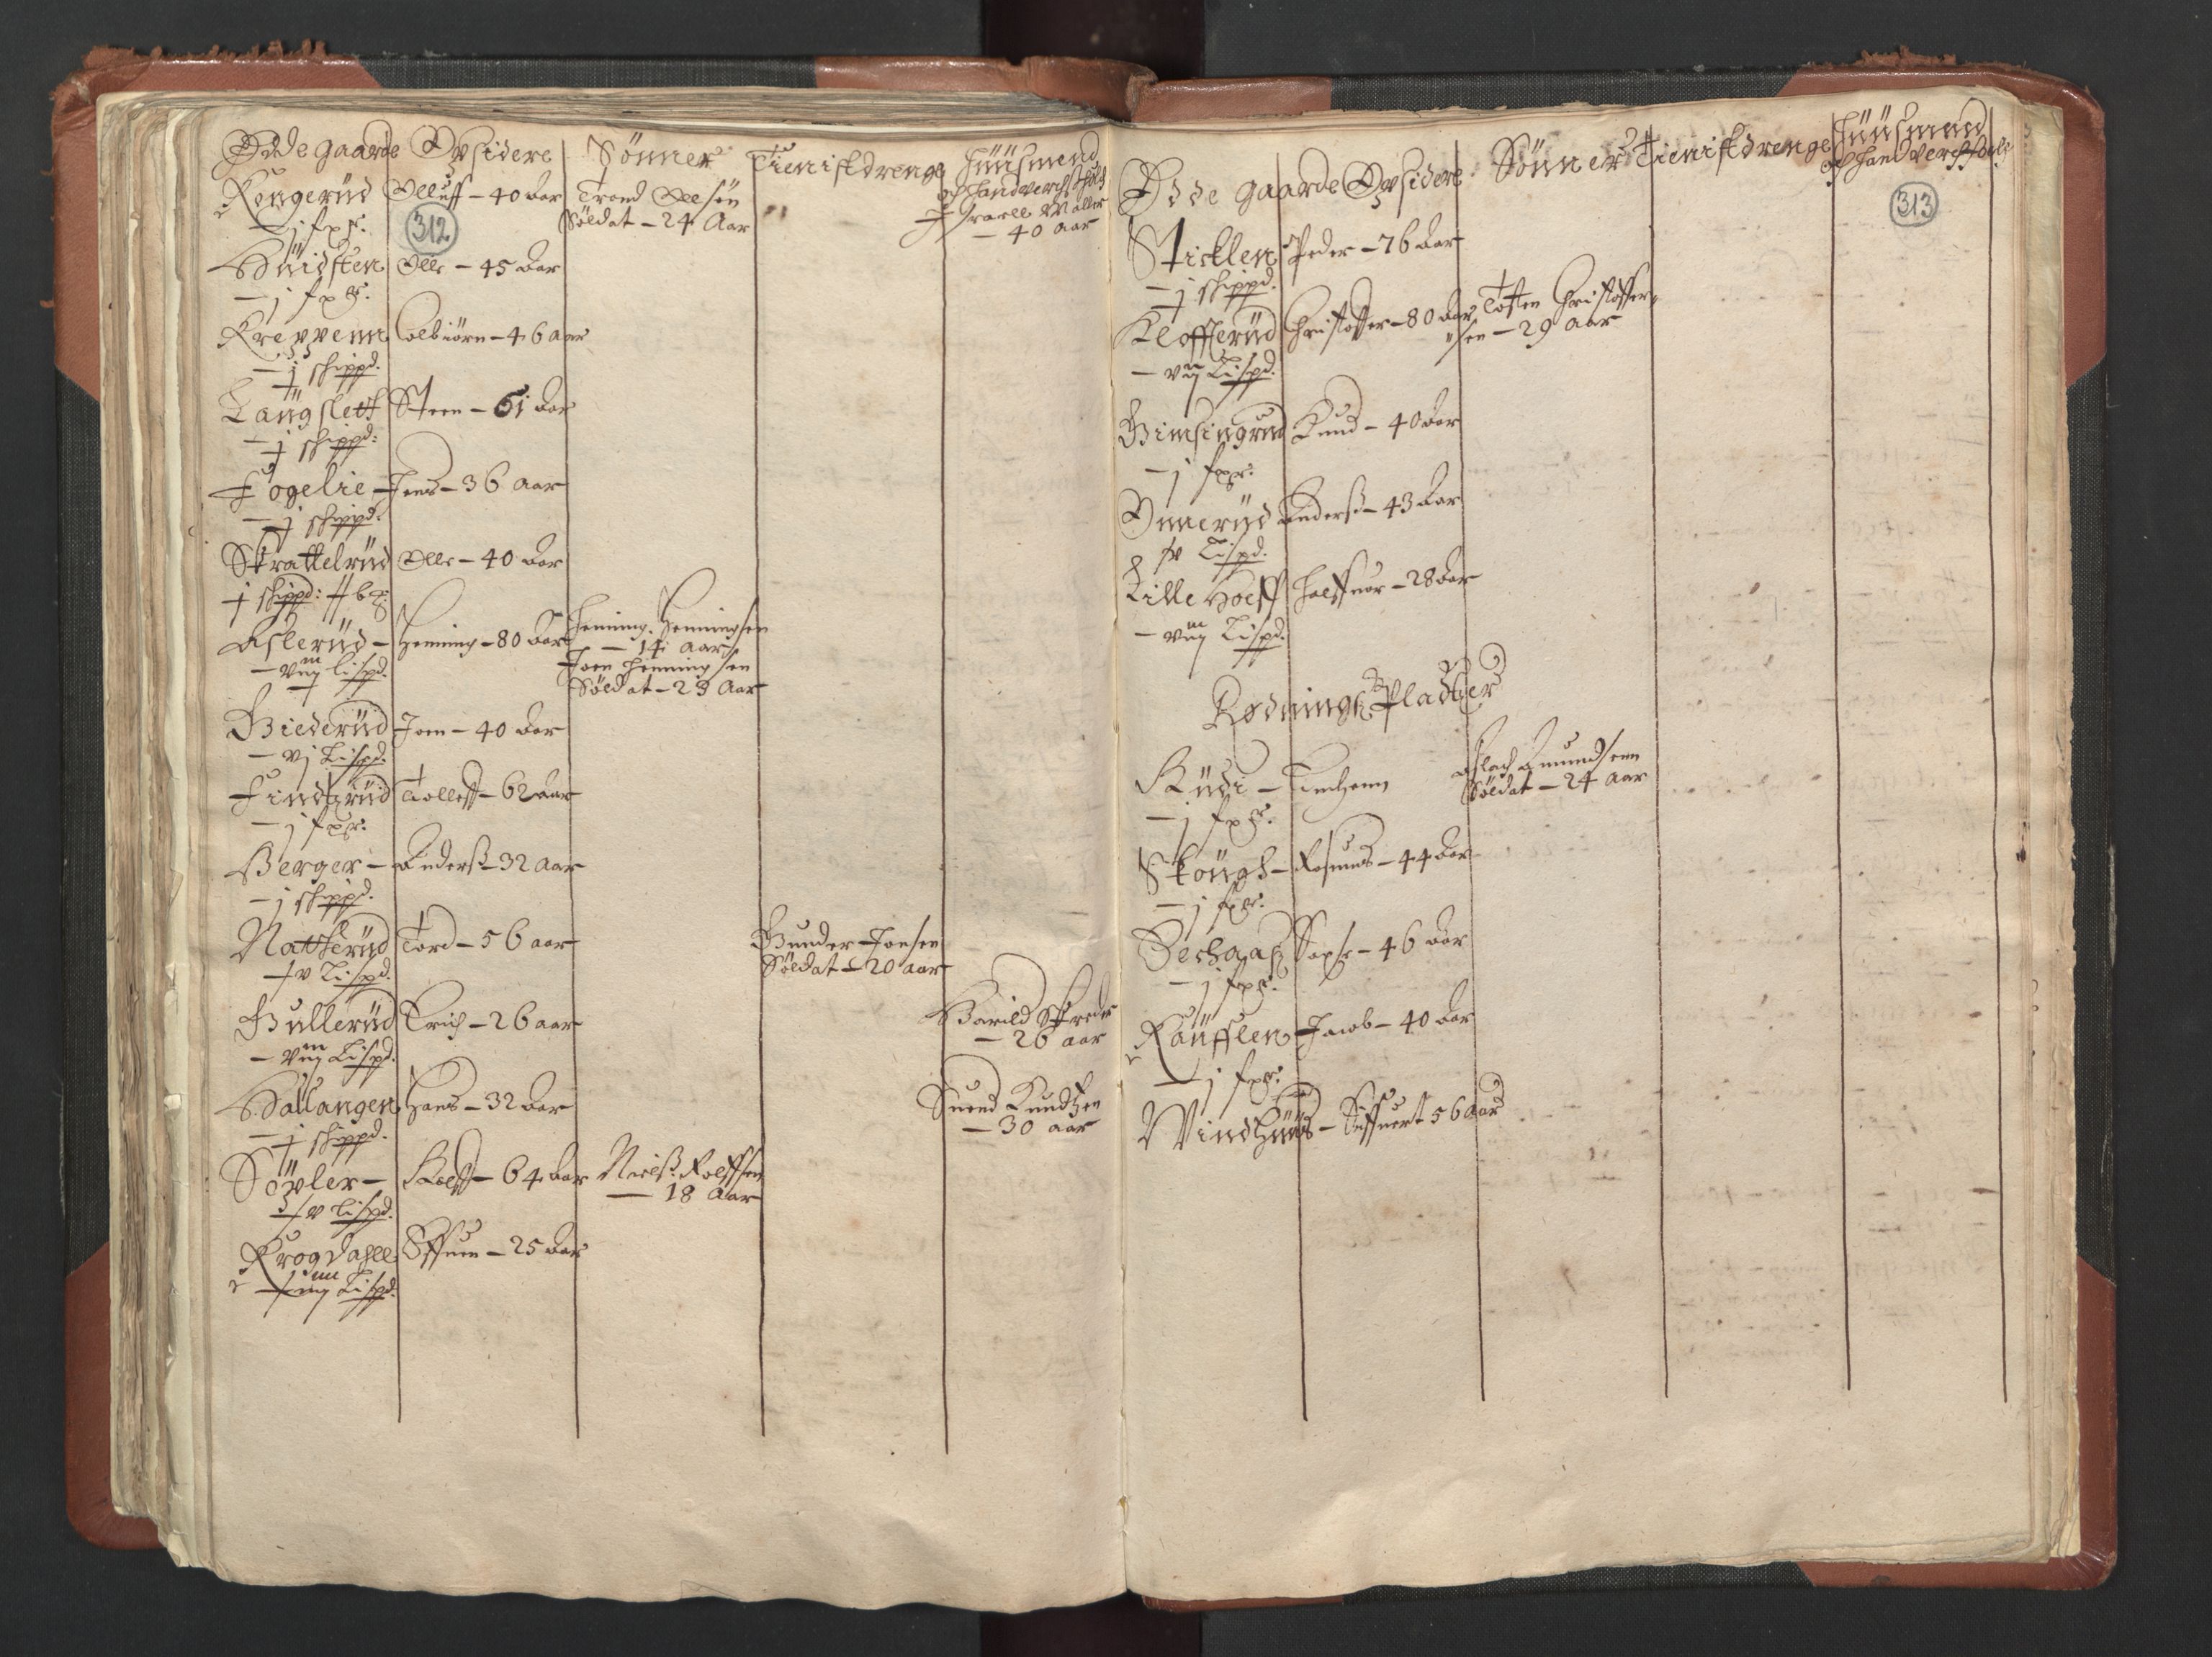 RA, Fogdenes og sorenskrivernes manntall 1664-1666, nr. 1: Fogderier (len og skipreider) i nåværende Østfold fylke, 1664, s. 312-313